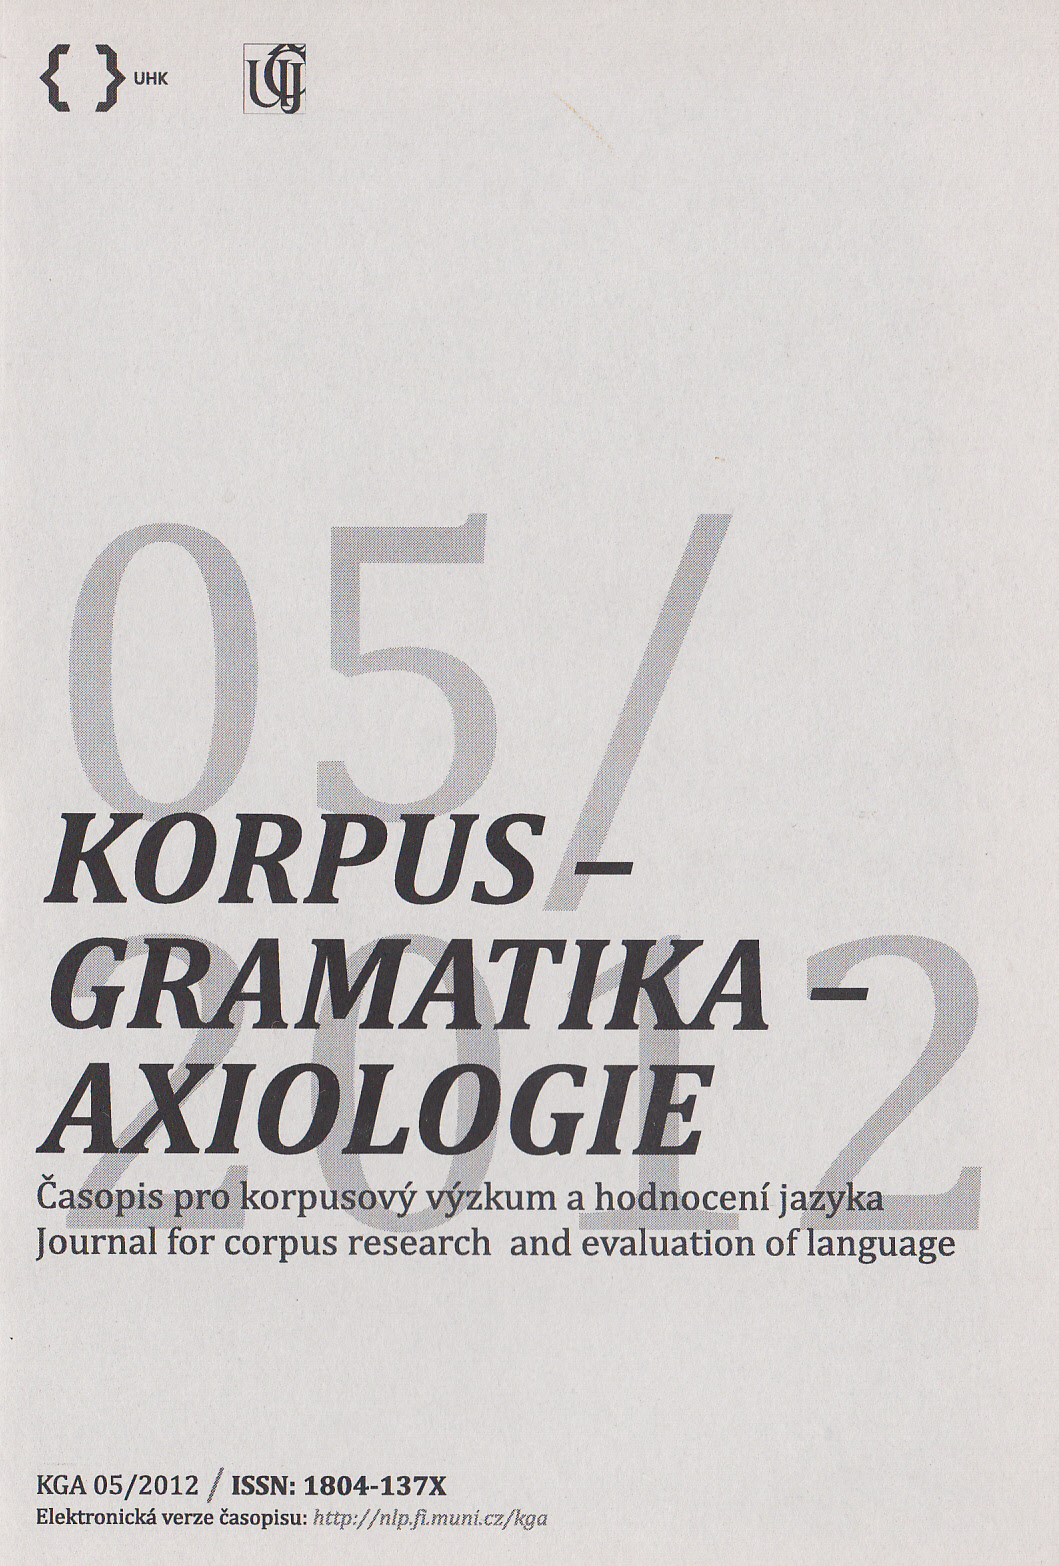 František Čermák, Vladimír Petkevič, Alexandr Rosen (eds.): Korpusová lingvistika Praha 2011, 1–3.